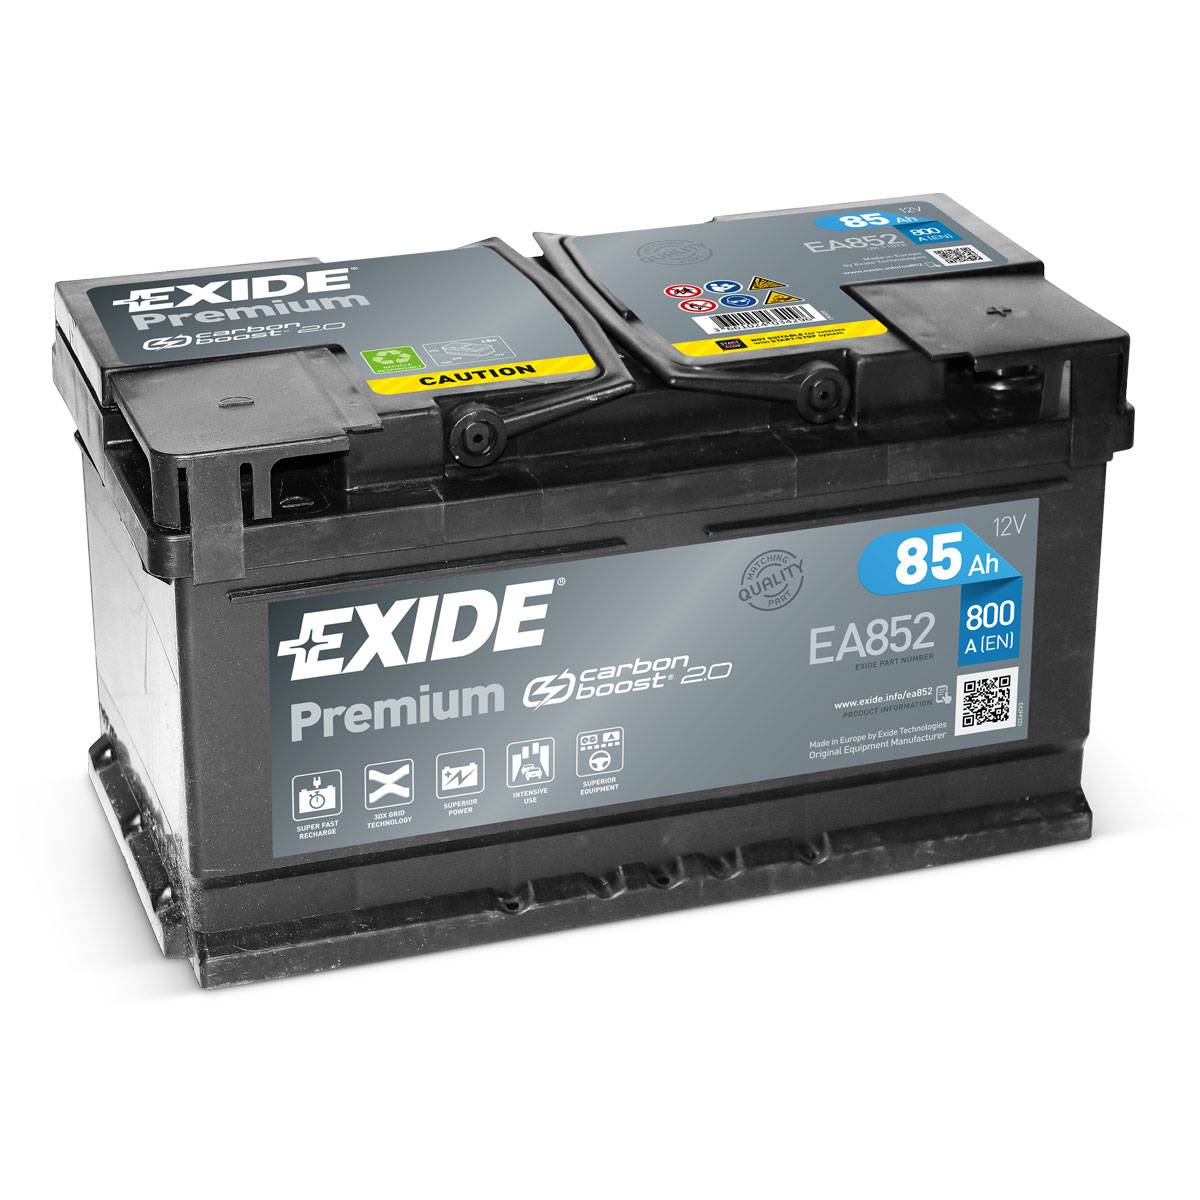 EXIDE EL600 Batterie